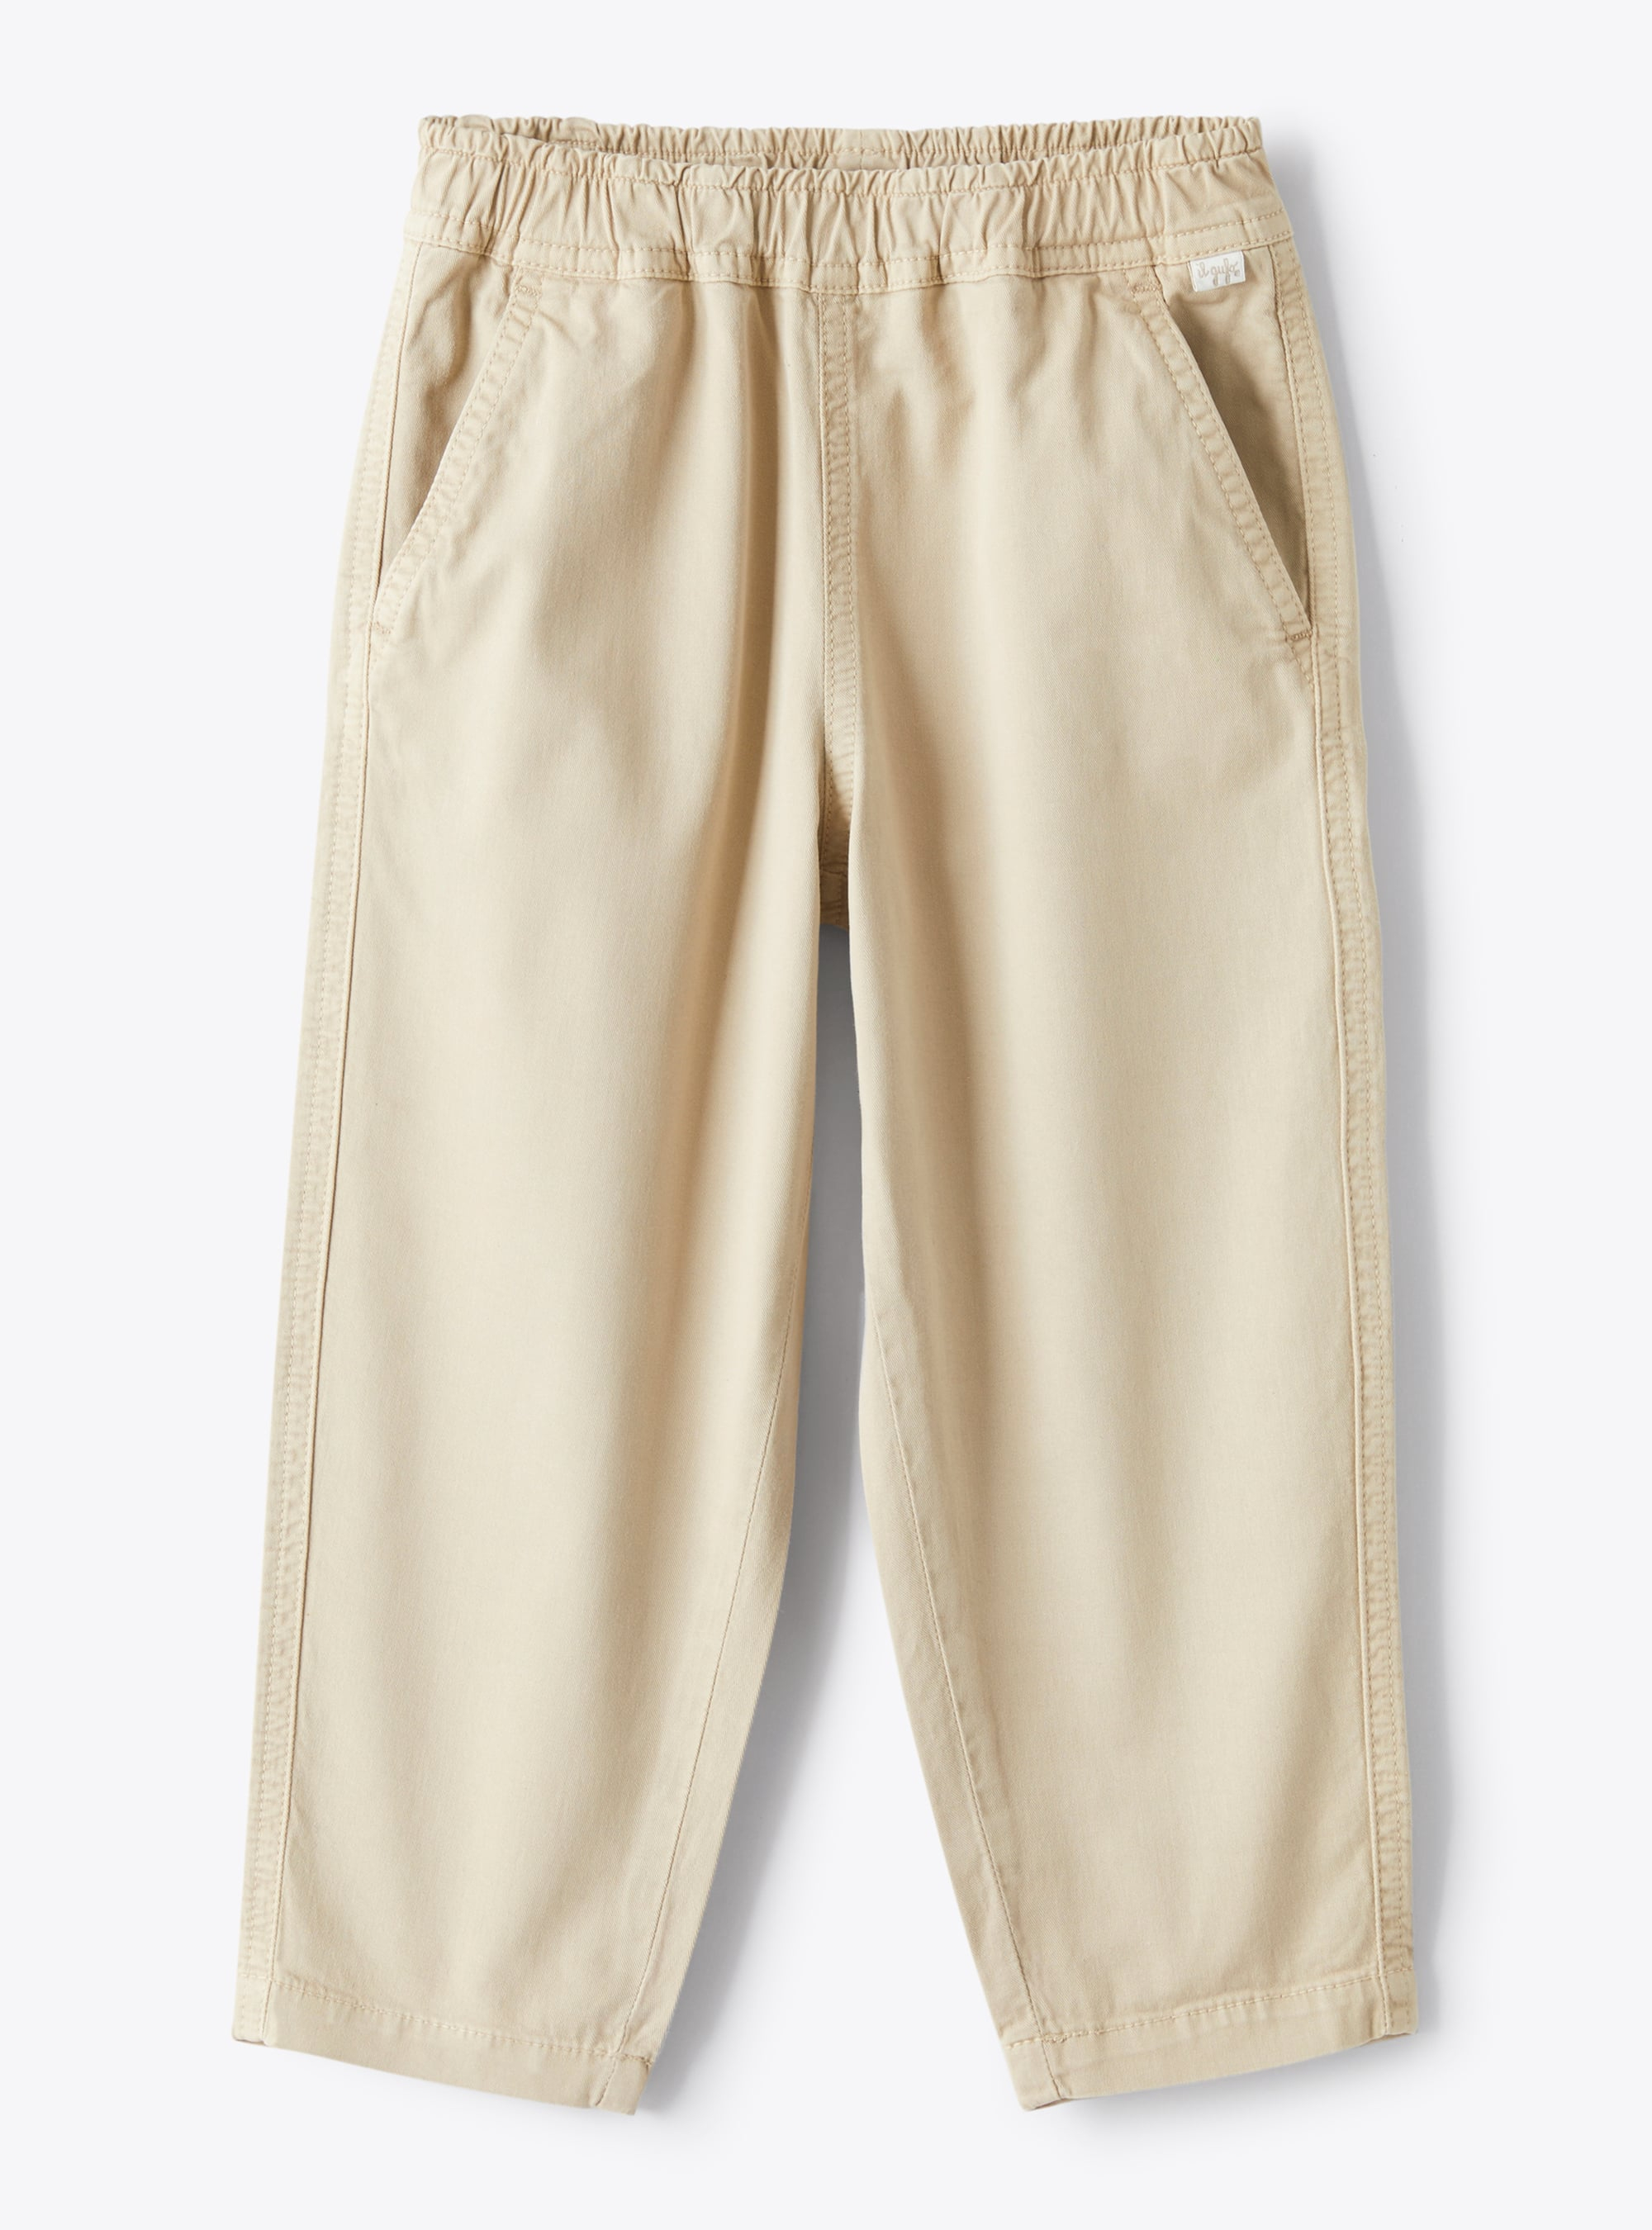 Pantalone lungo in gabardina tinto capo color avena - Pantaloni - Il Gufo